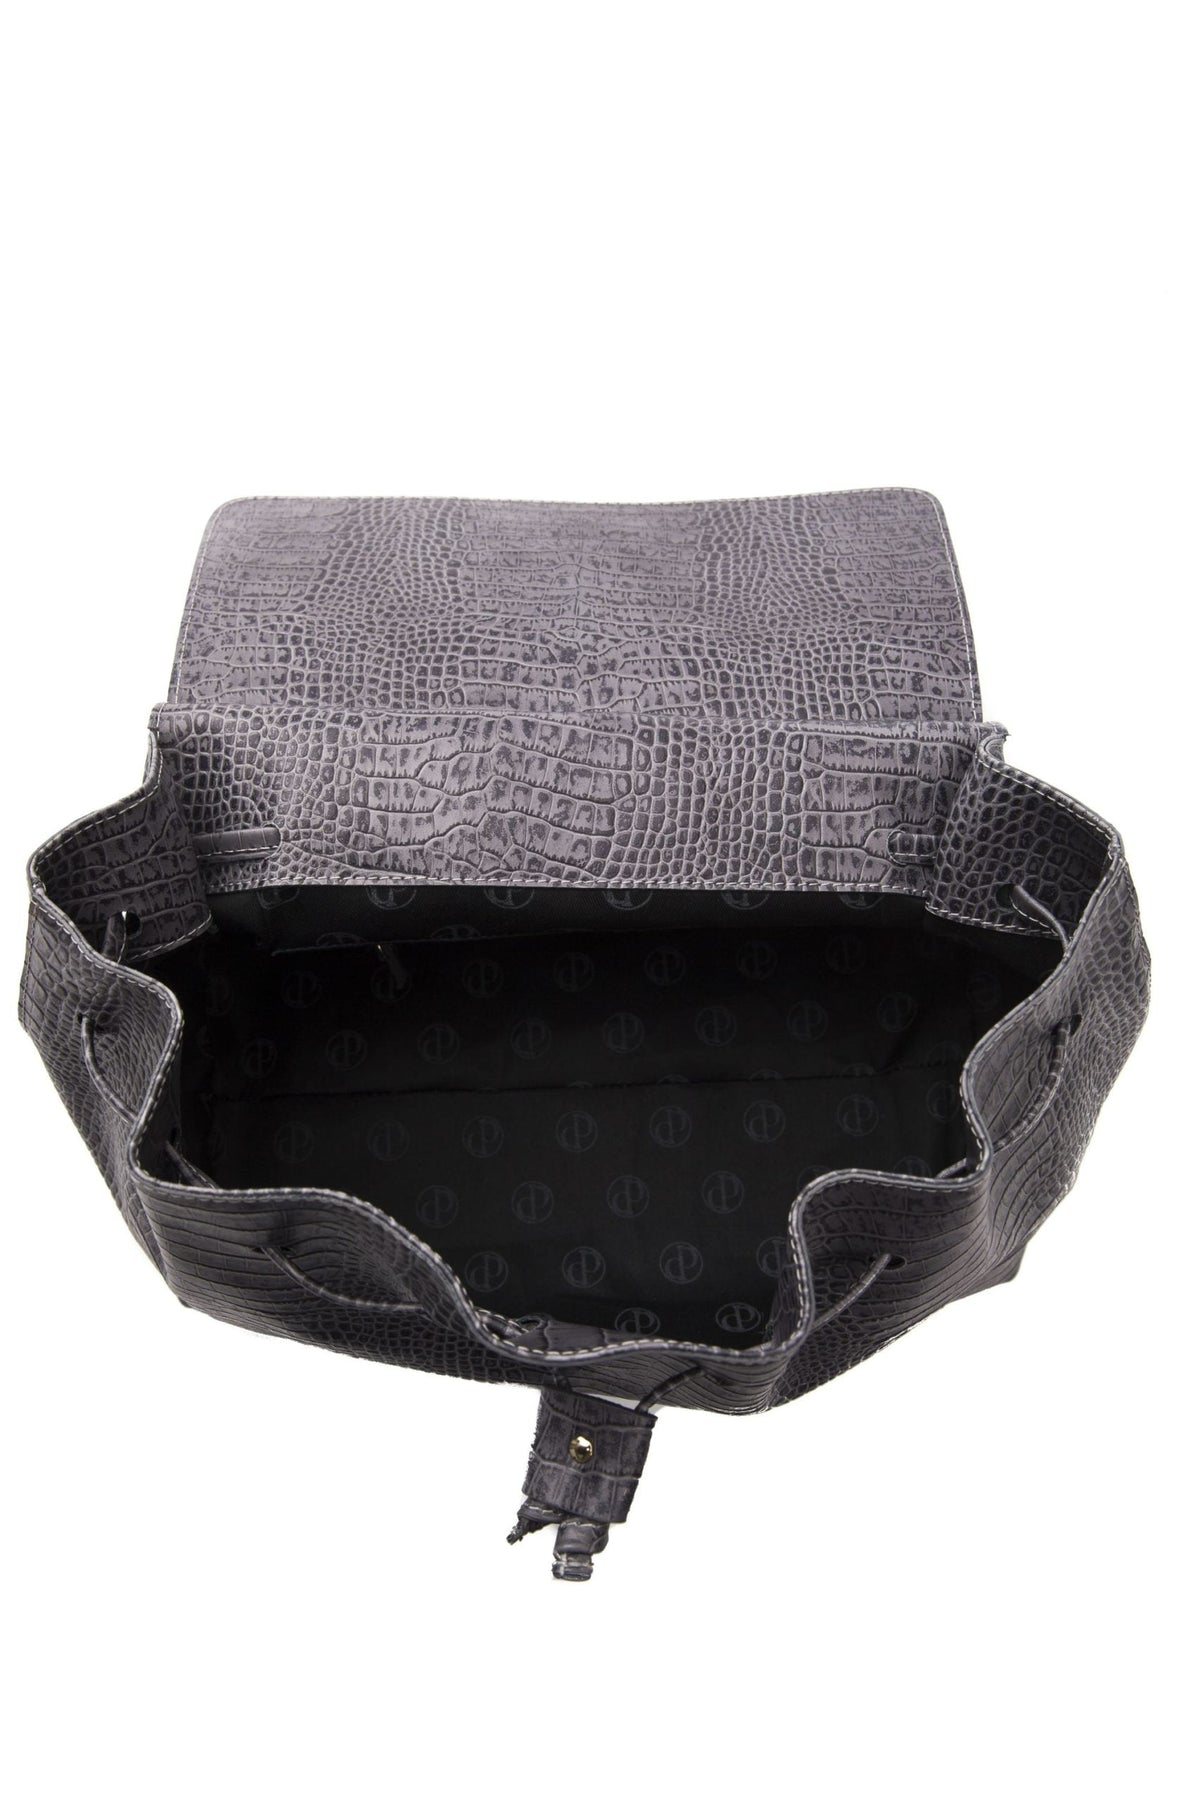 Gray Leather Handbag by Faz